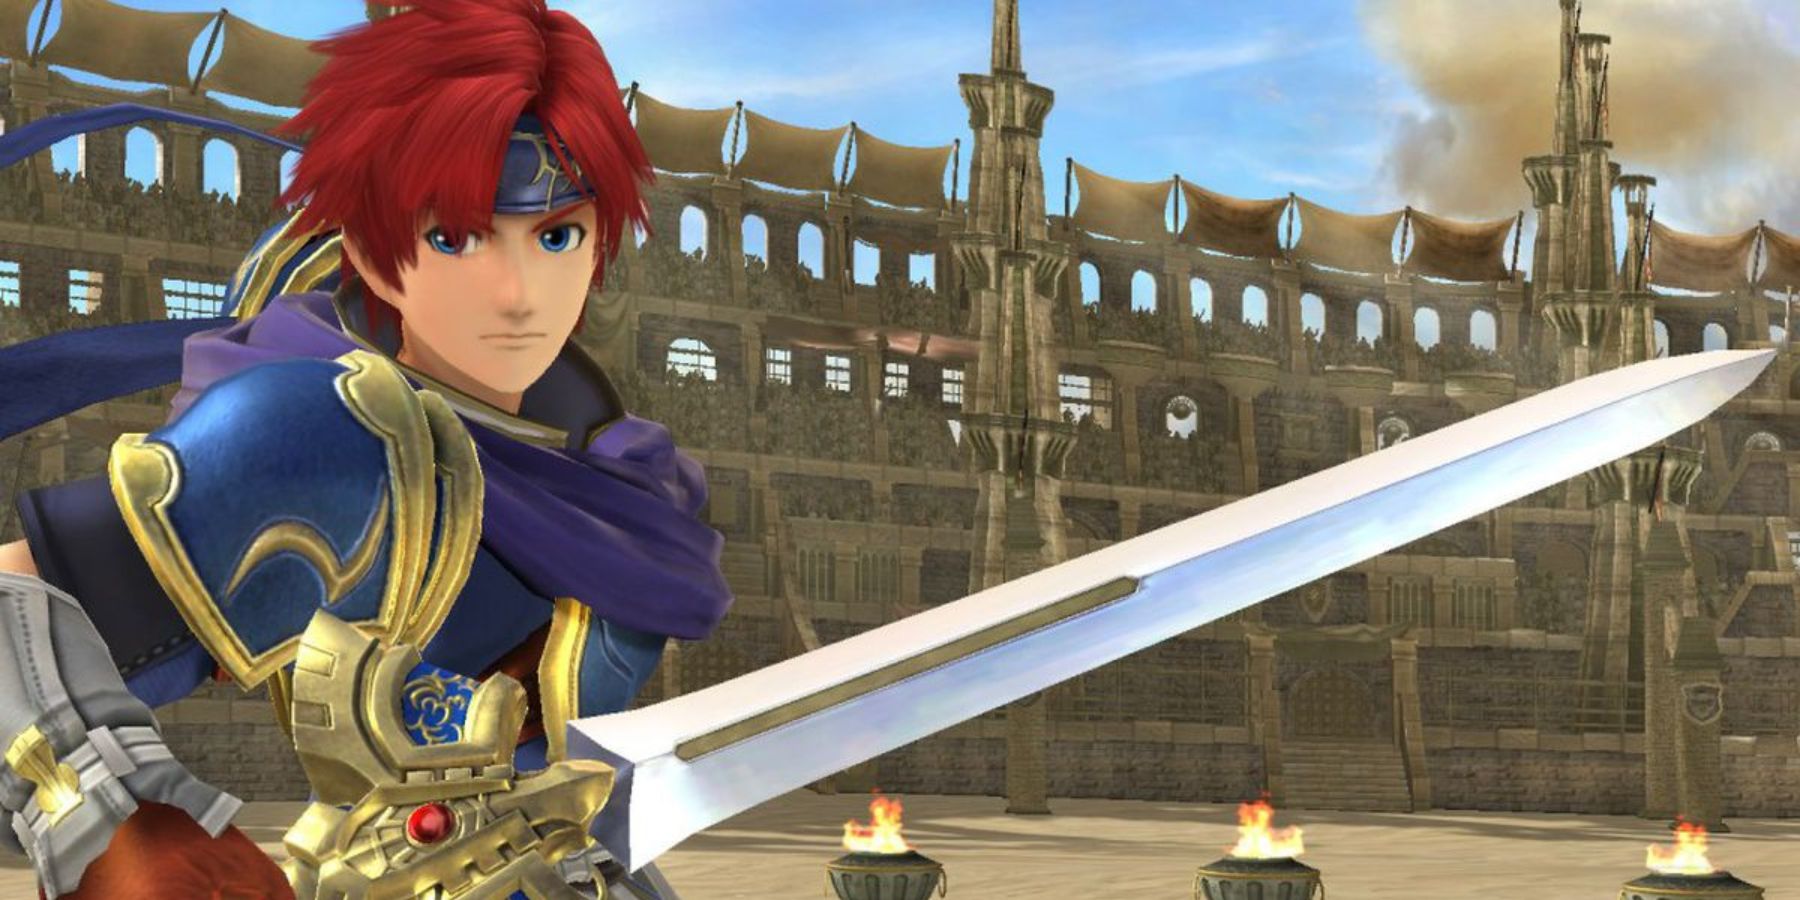 Roy holding his sword